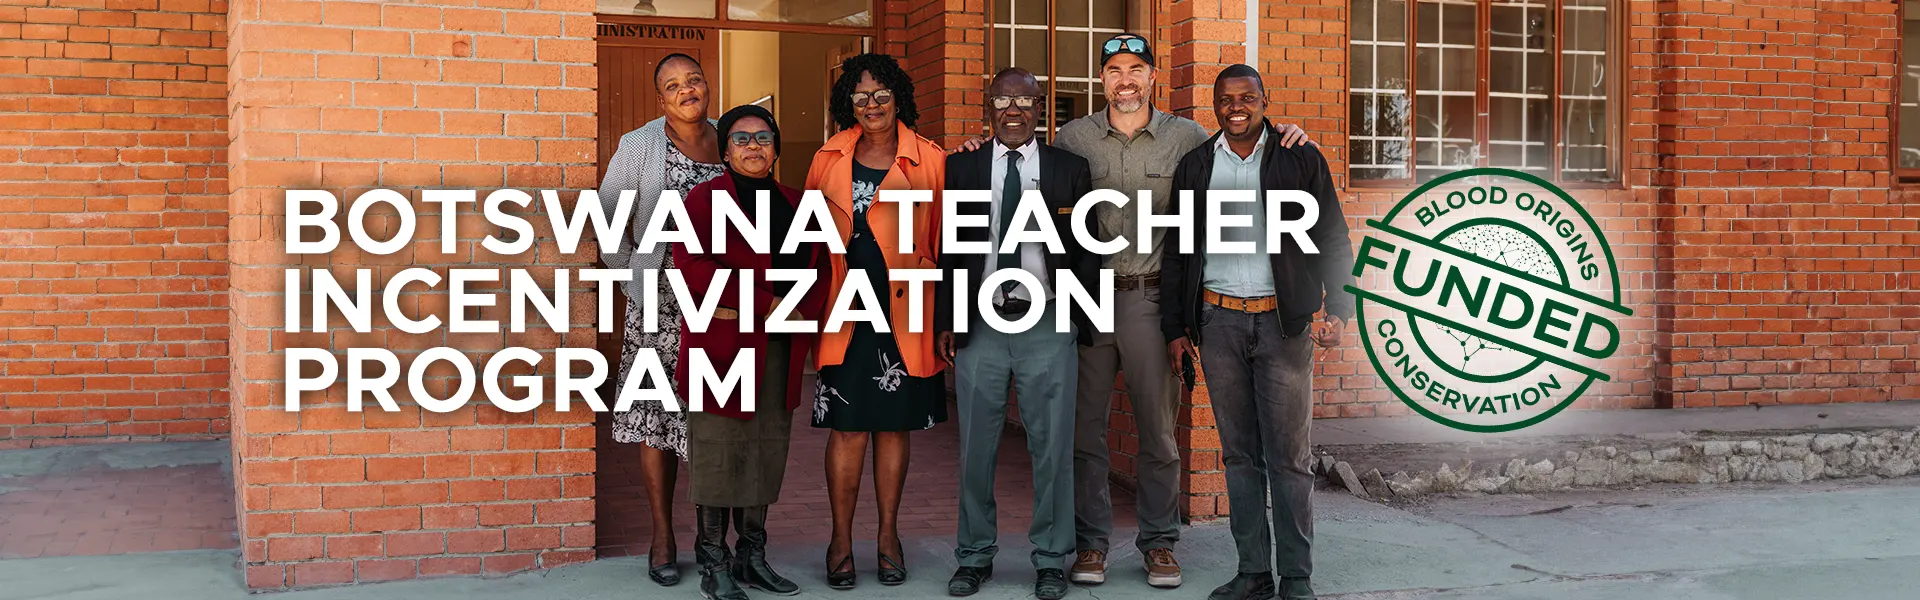 Botswana Teacher Incentivization Program project desktop